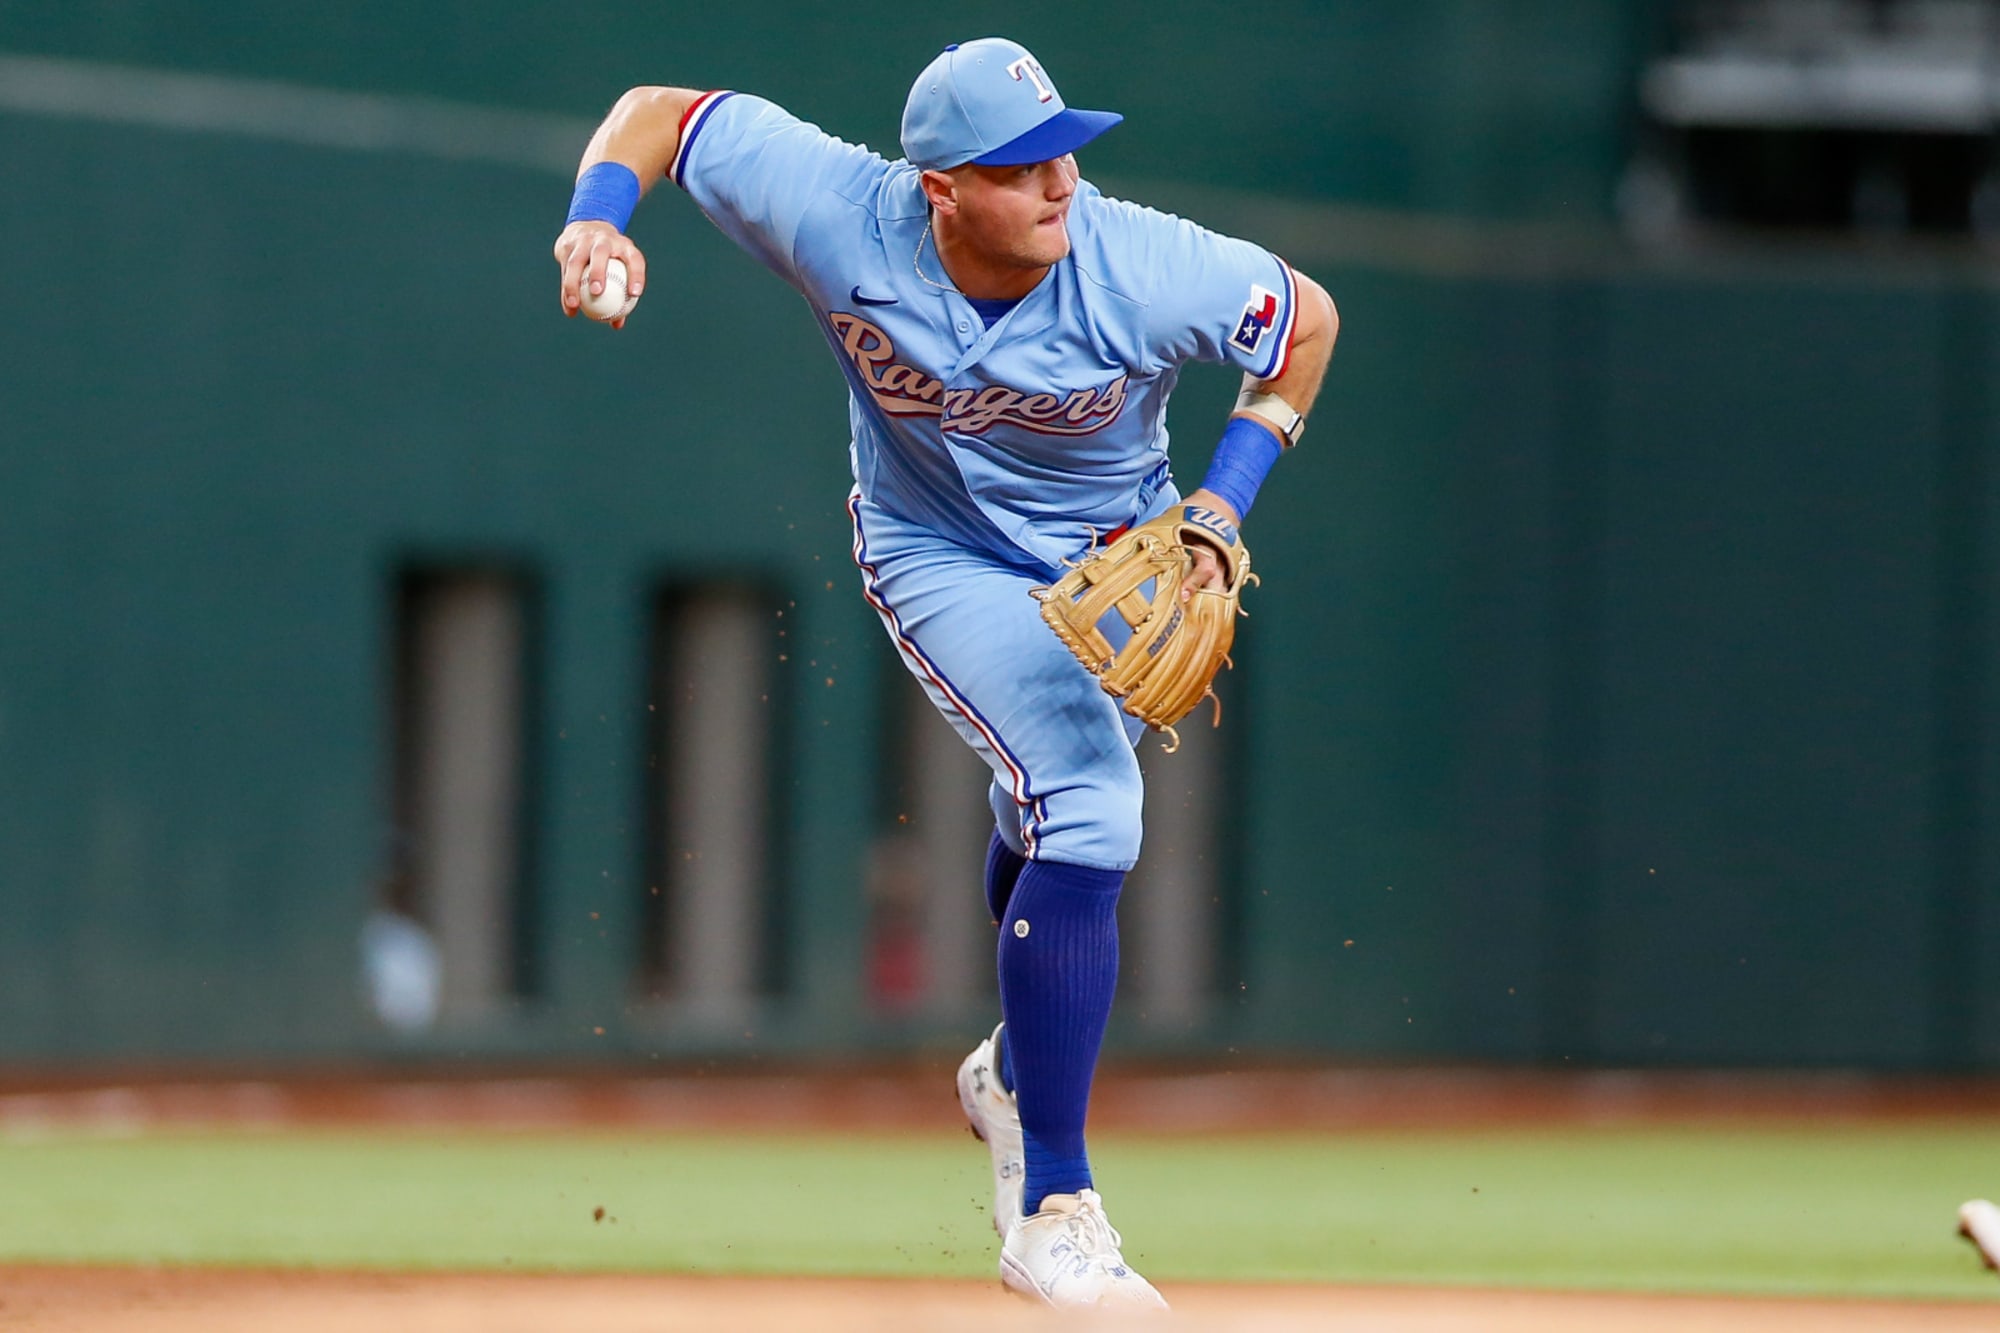 Texas Tech baseball alums: Josh Jung's season in jeopardy after broken thumb